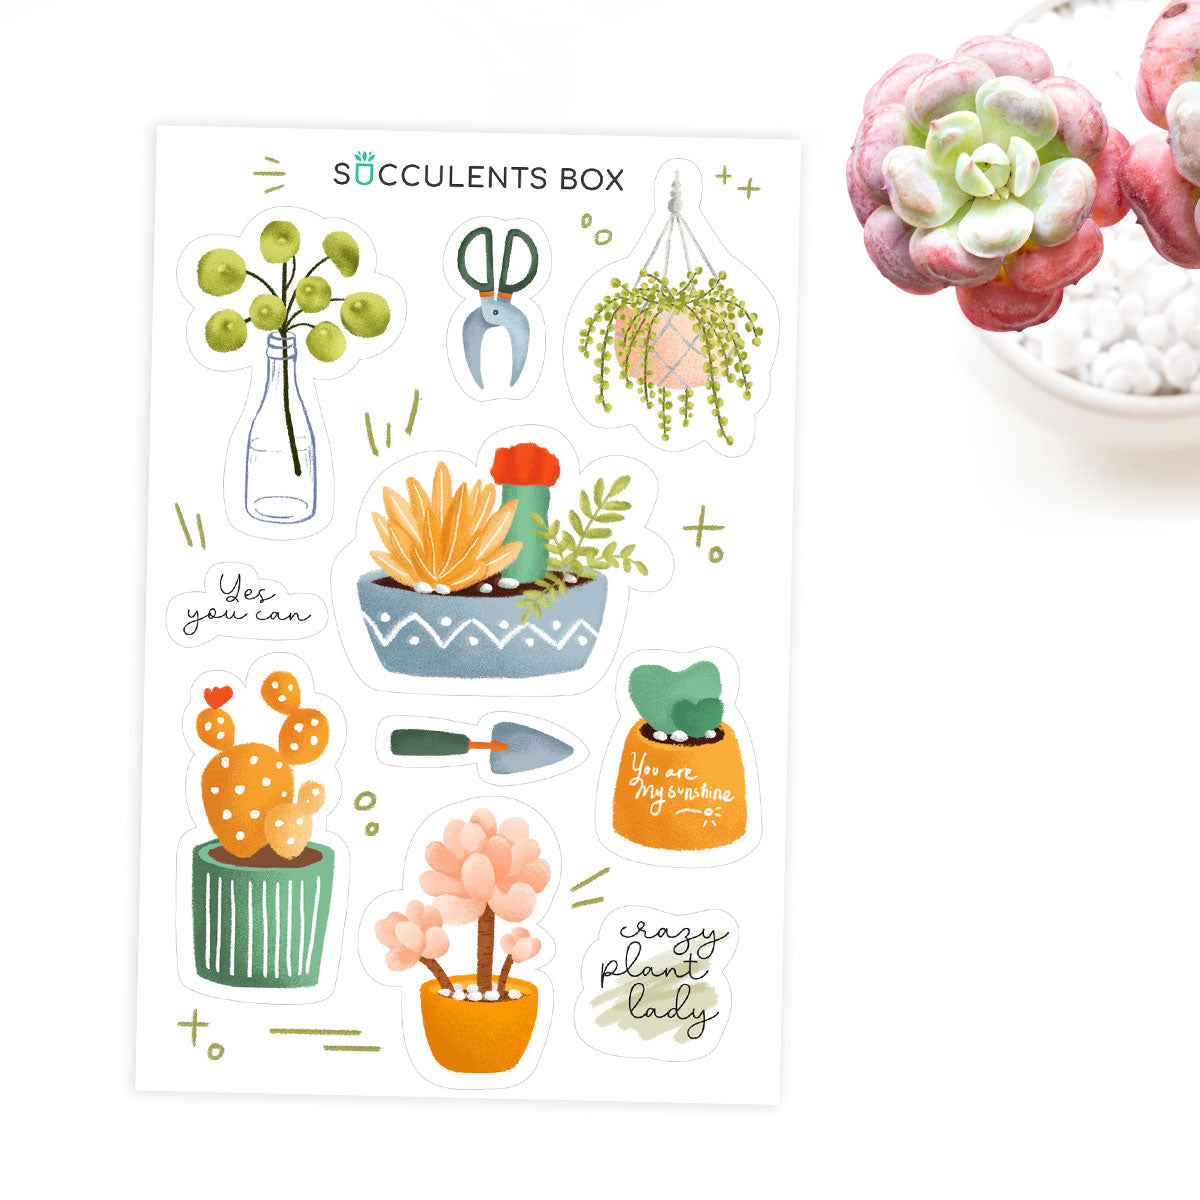 Succulent Planner Sticker for sale, succulent craft ideas, succulent gift ideas, cute plant stickers, decorative scrapbook sticker for sale, Plant Lady Sticker